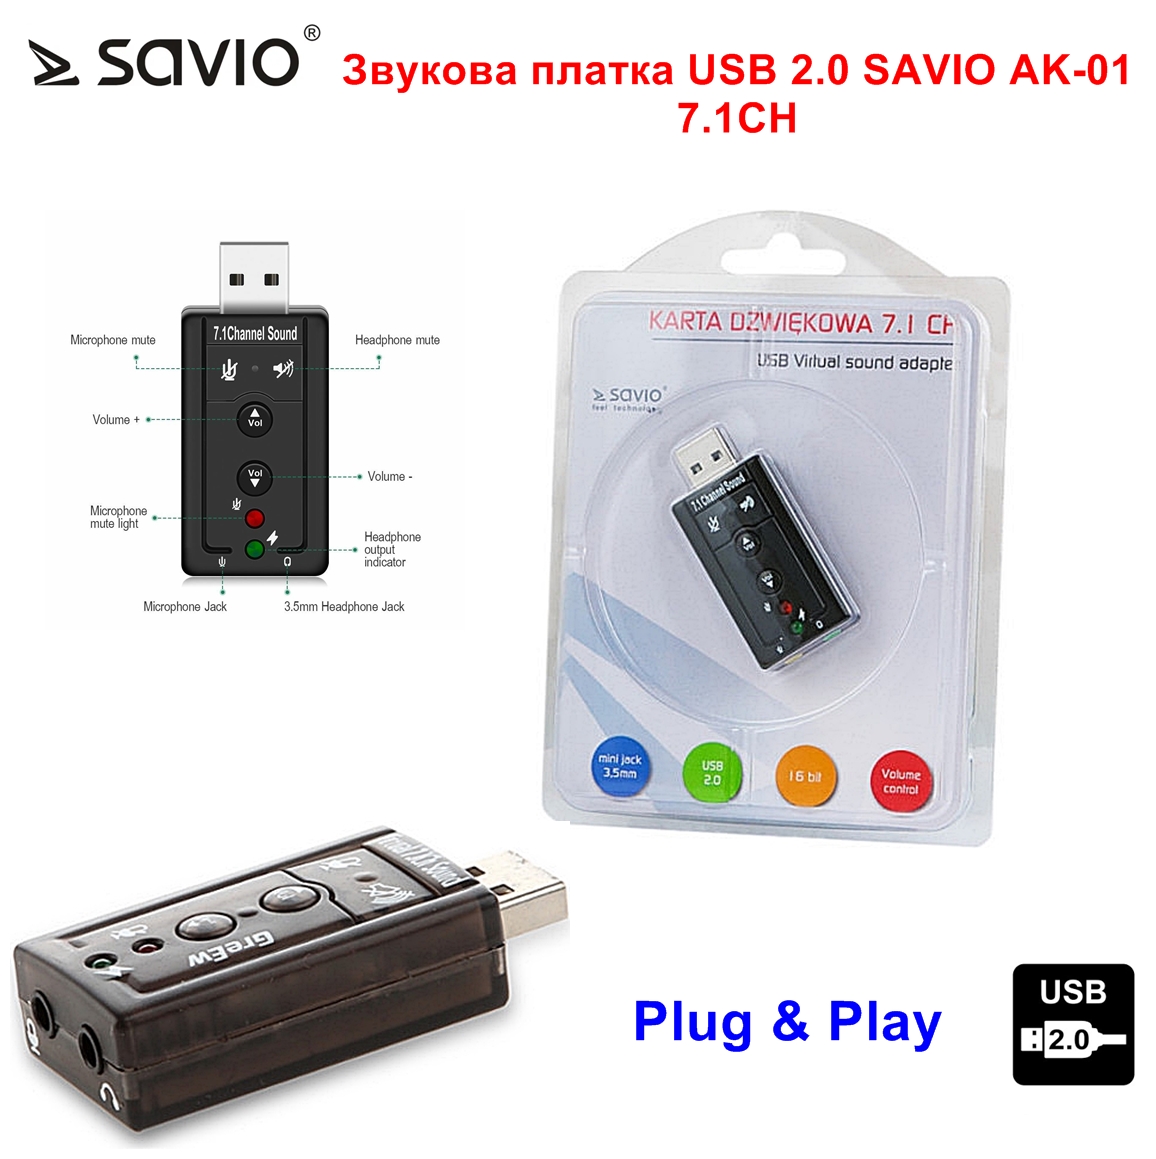 Звукова платка USB 2.0 SAVIO AK-01 7.1CH